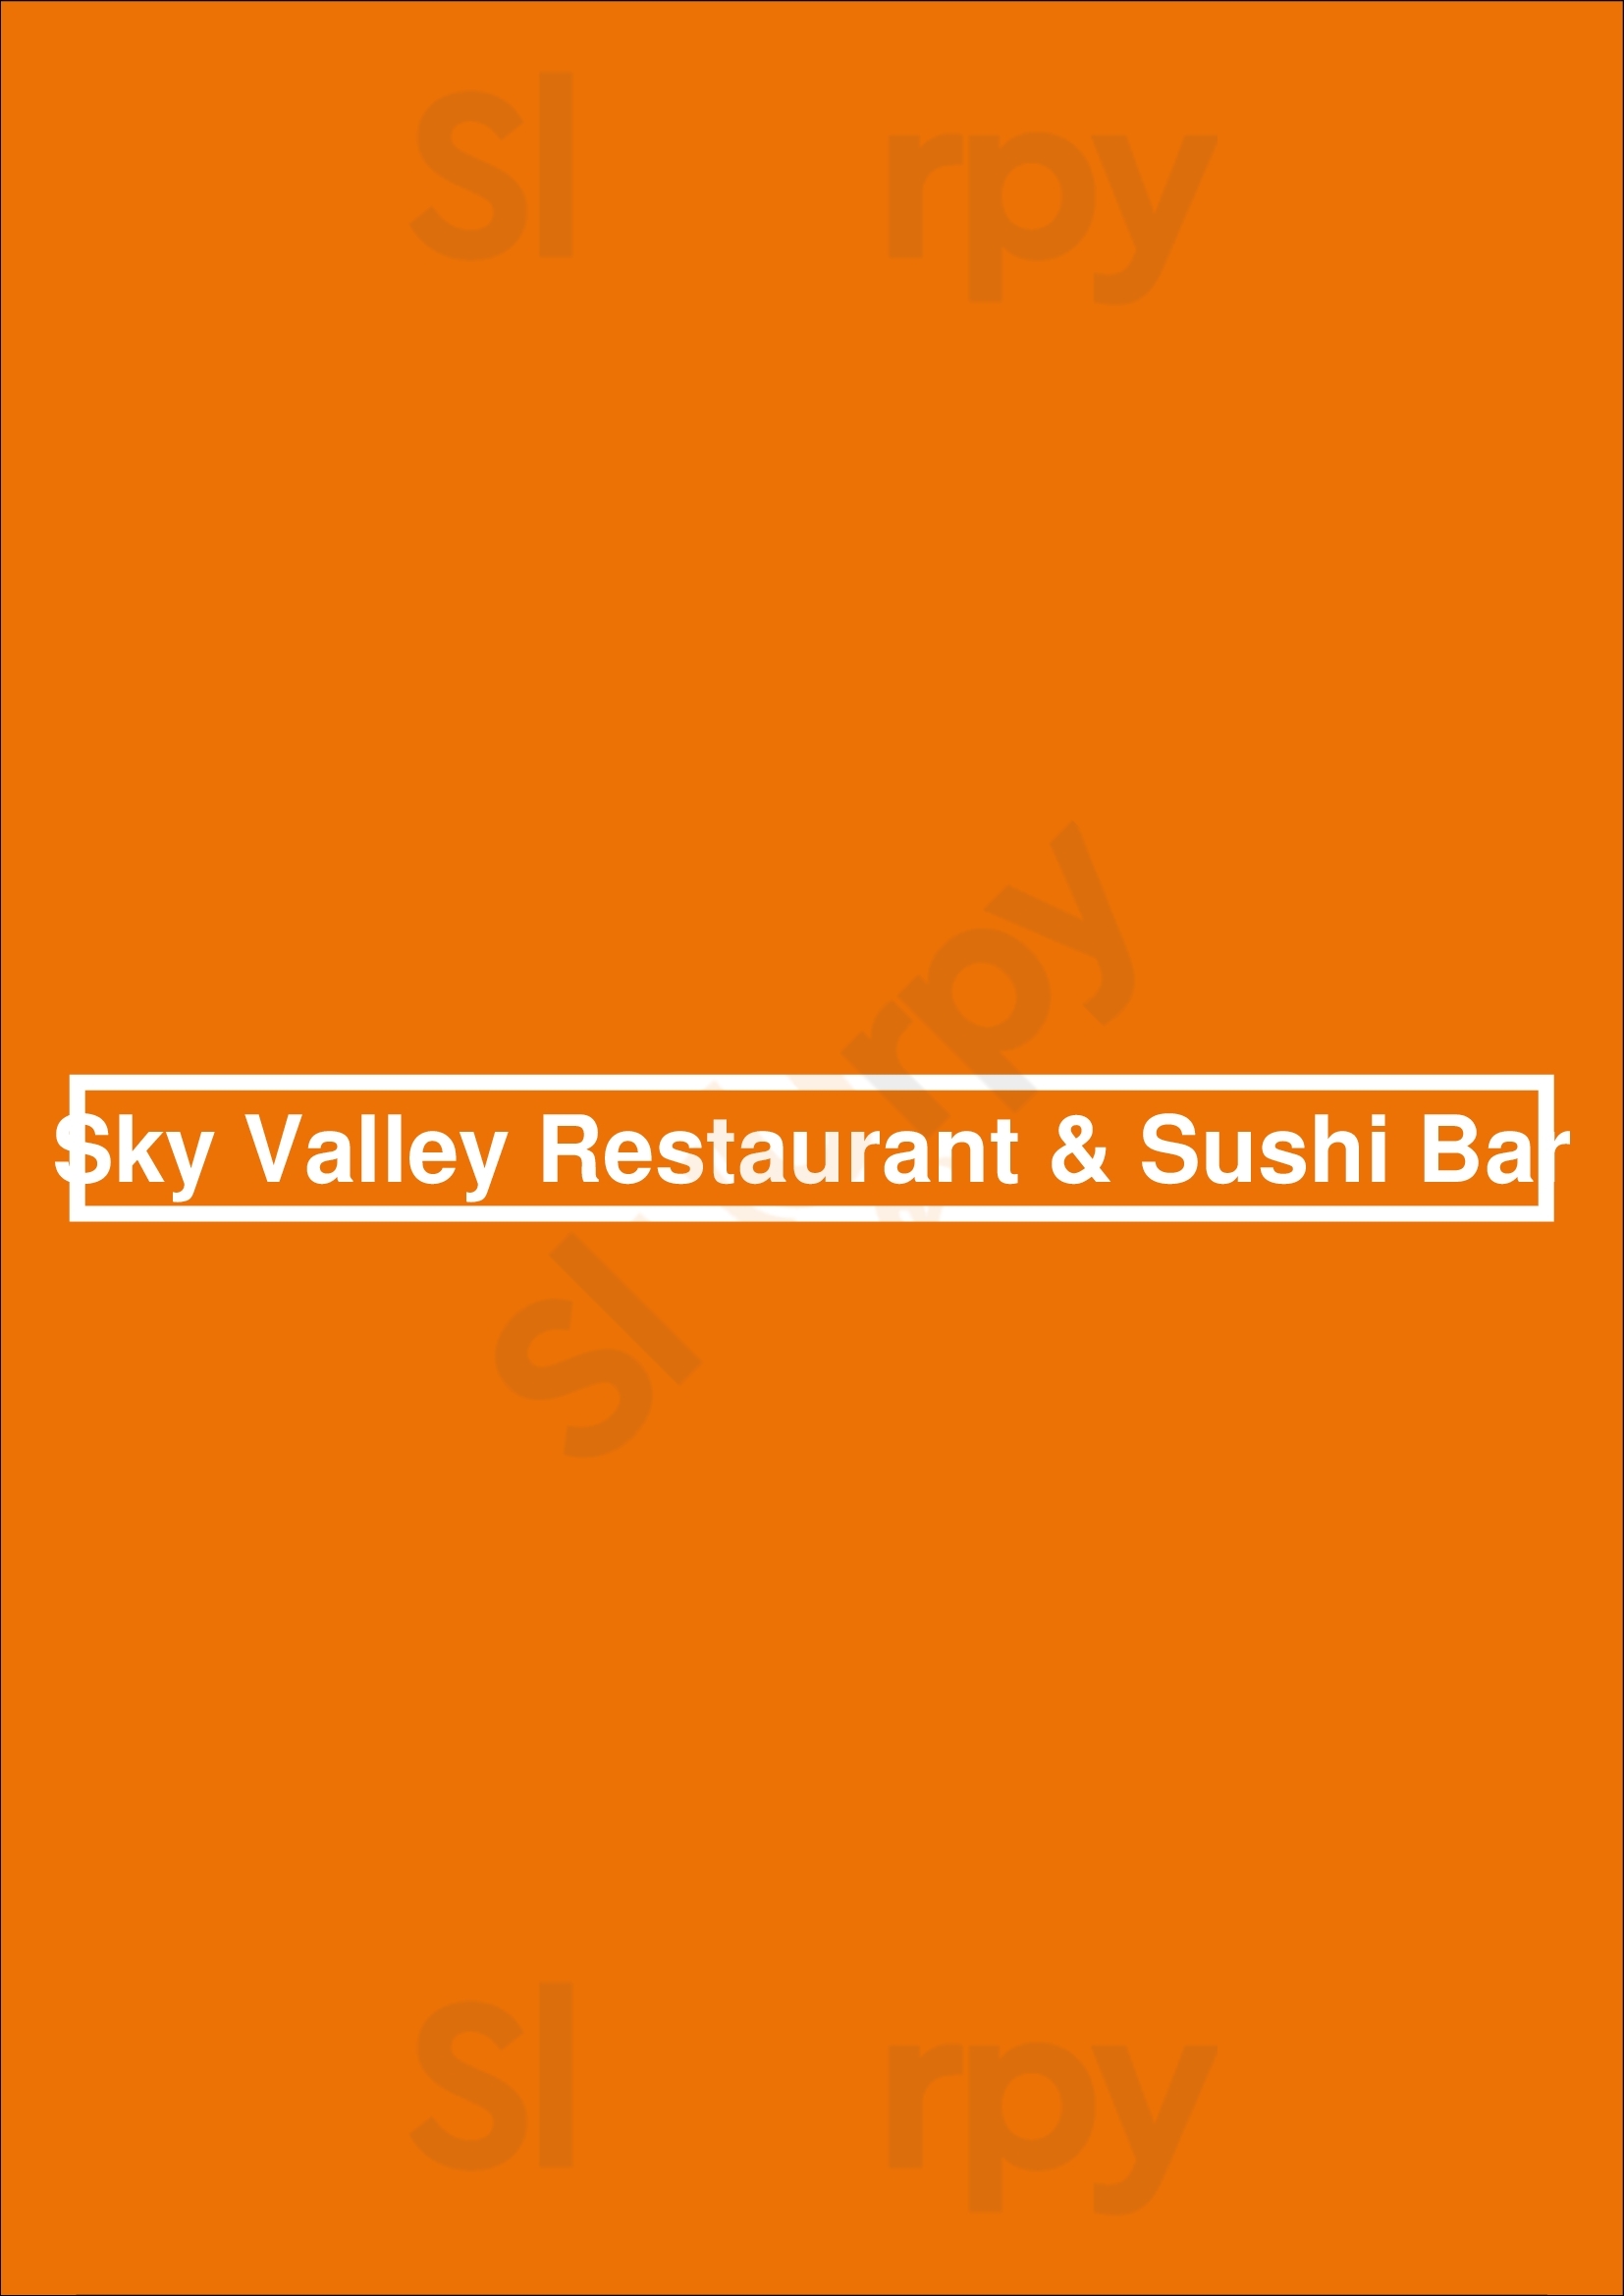 Sky Valley Restaurant & Sushi Bar Esposende Menu - 1